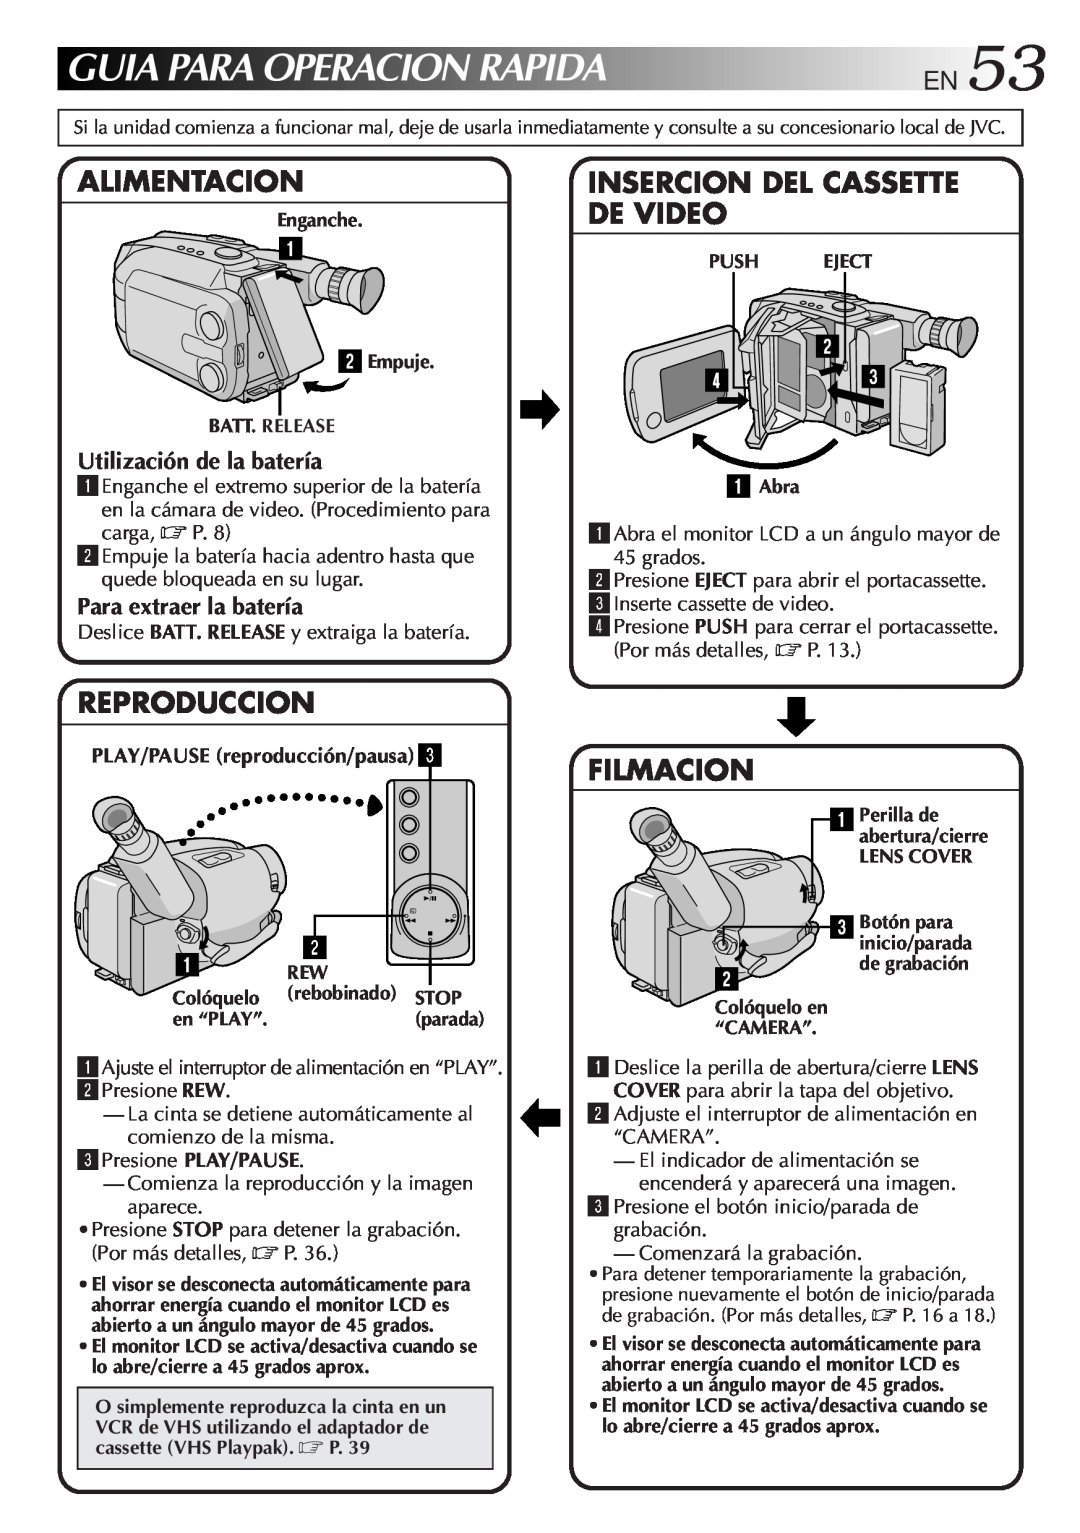 JVC GR-AXM100 manual GUIAPARAOPERACIONRAPIDAEN53, Alimentacion, Insercion Del Cassette De Video, Reproduccion, Filmacion 